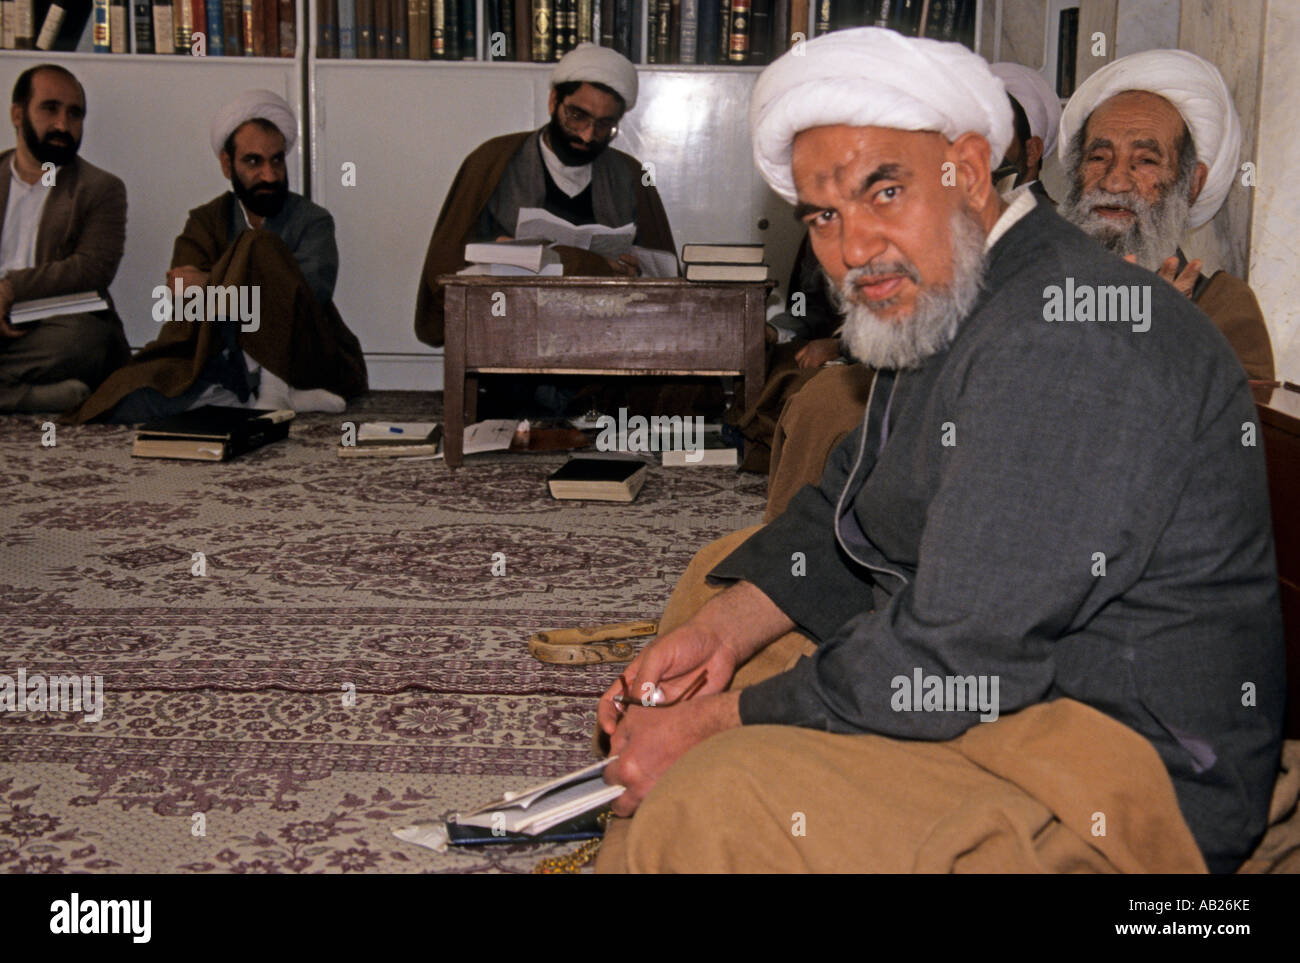 Mullah studiosi islamici in una madrassa in Qom Iran Foto Stock